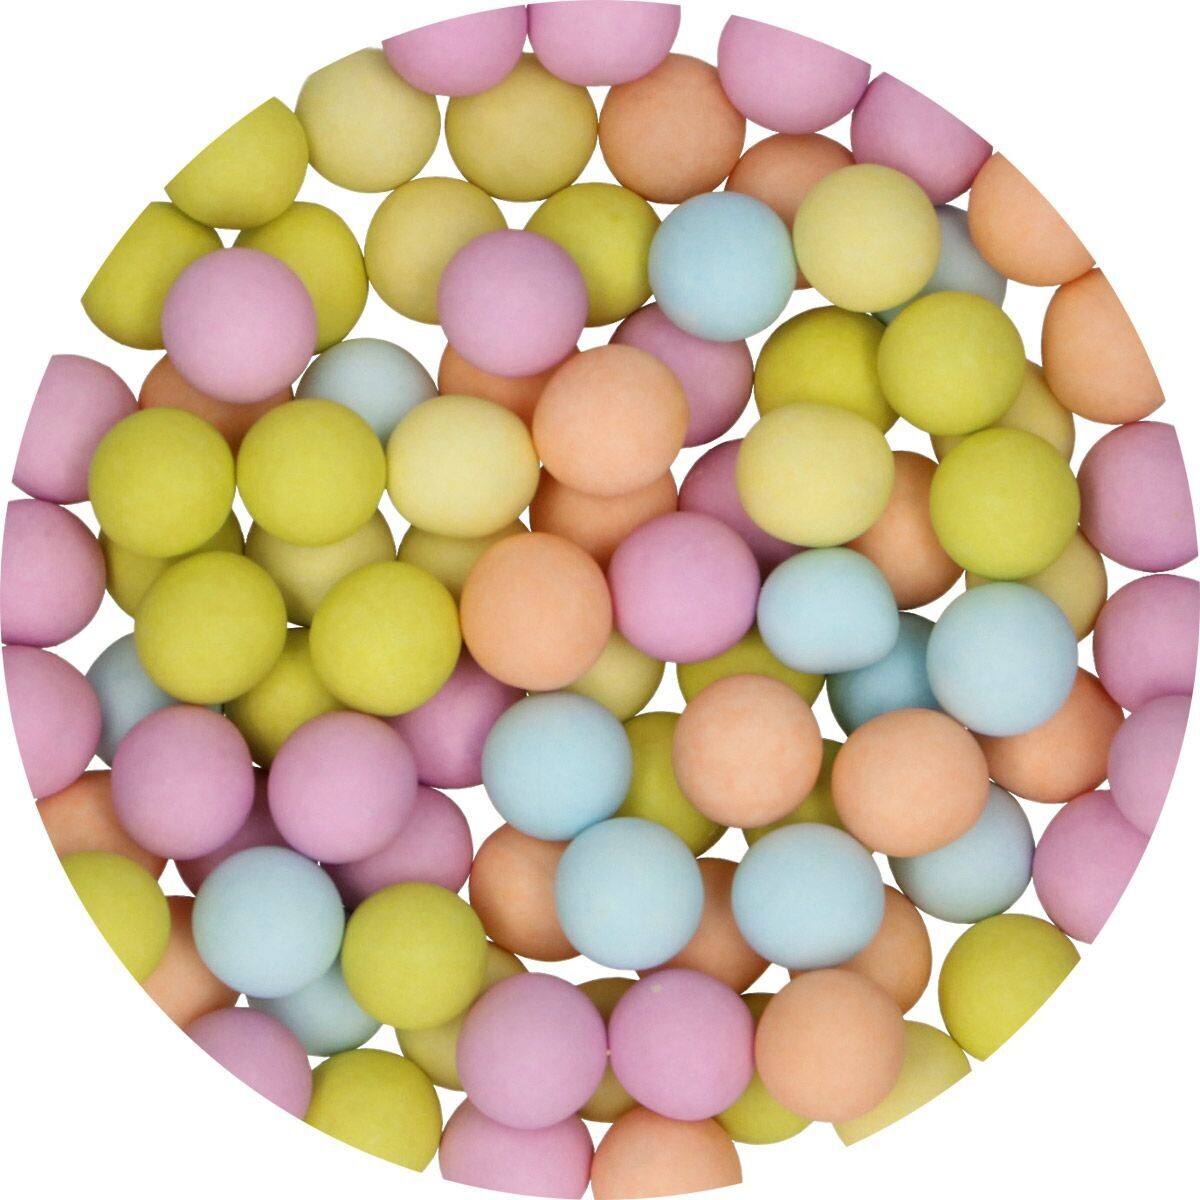 FunCakes Candy Choco Pearls Large MATT MIX 70γρ - Μεγάλες Σοκολατένιες Πέρλες Ματ σε Παστέλ Αποχρώσεις